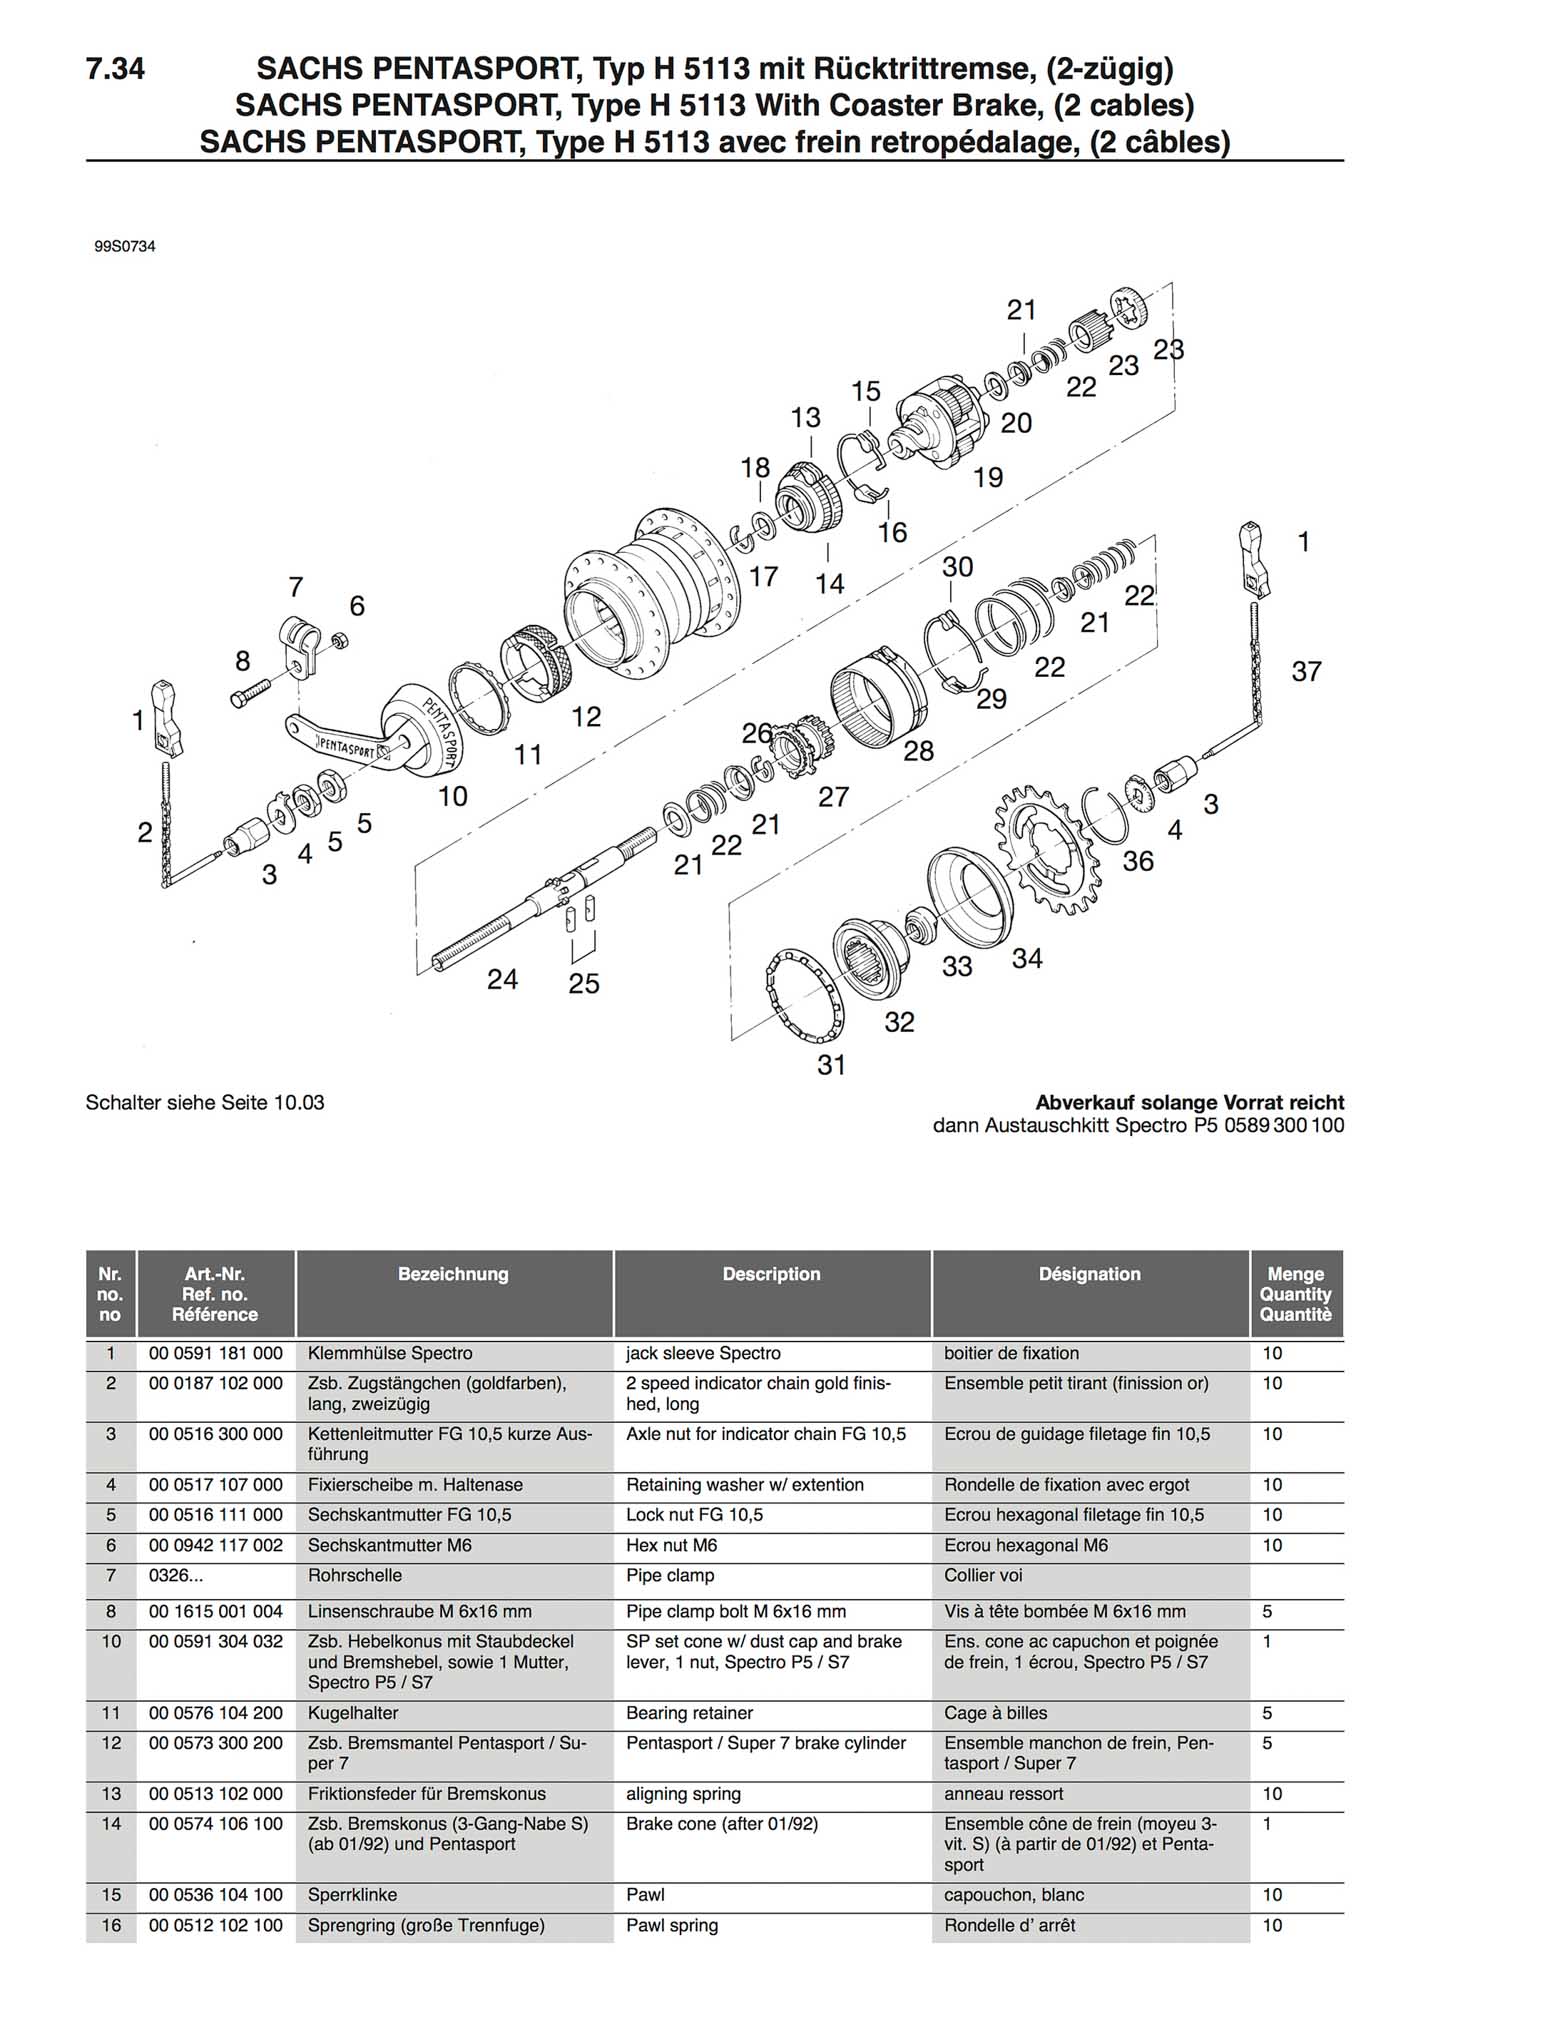 SRAM - Spare Parts List 1999 scan 106 main image